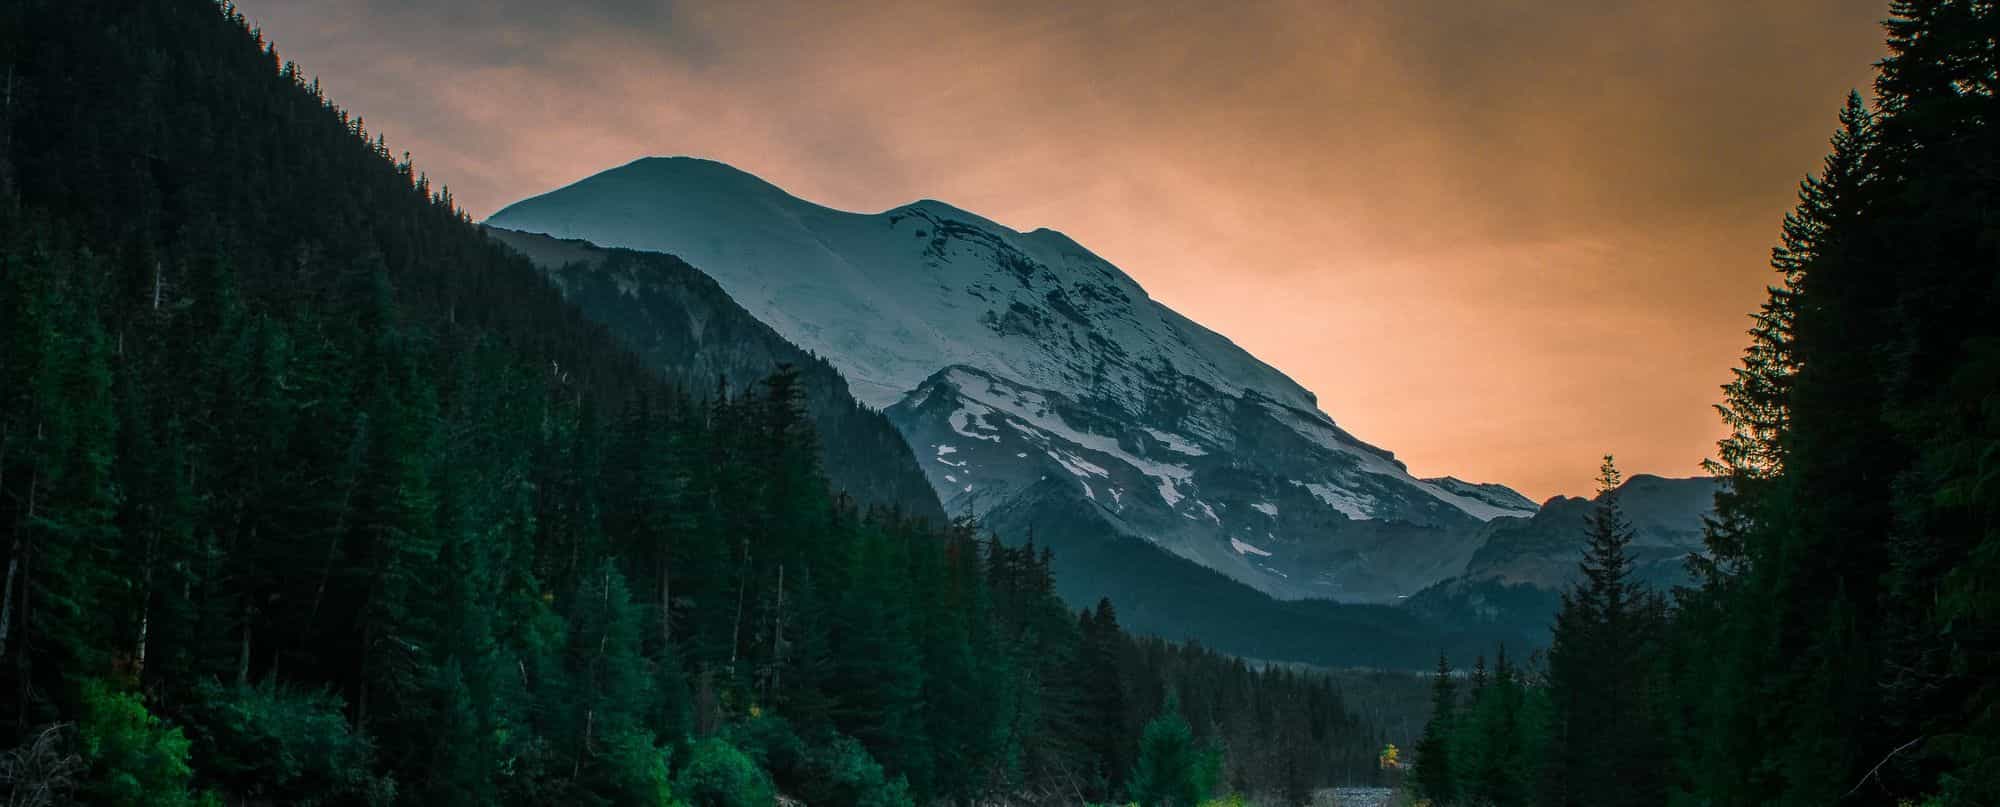 Mount Rainer, Ashford, Washington, USA